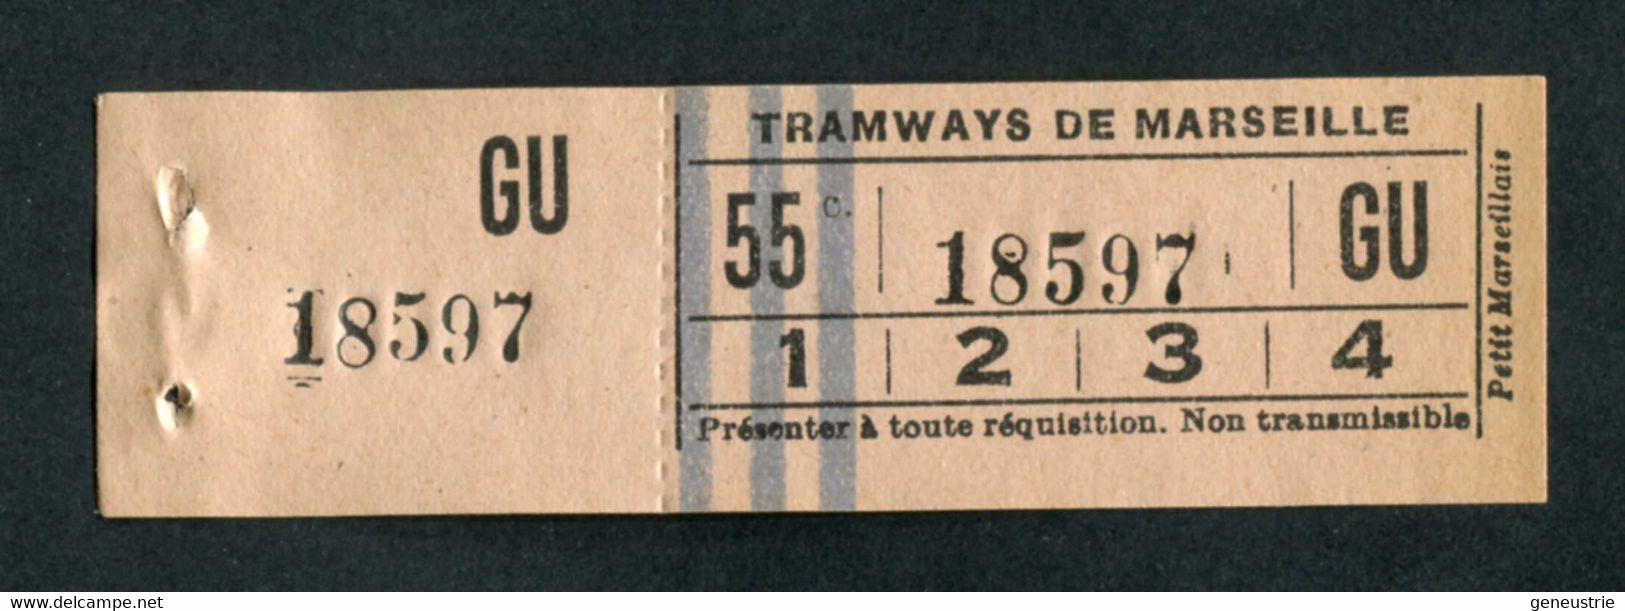 Ancien Ticket De Tramway Marseillais Années 40 "Tramways De Marseille" Billet De Tram Avec Souche - Europe